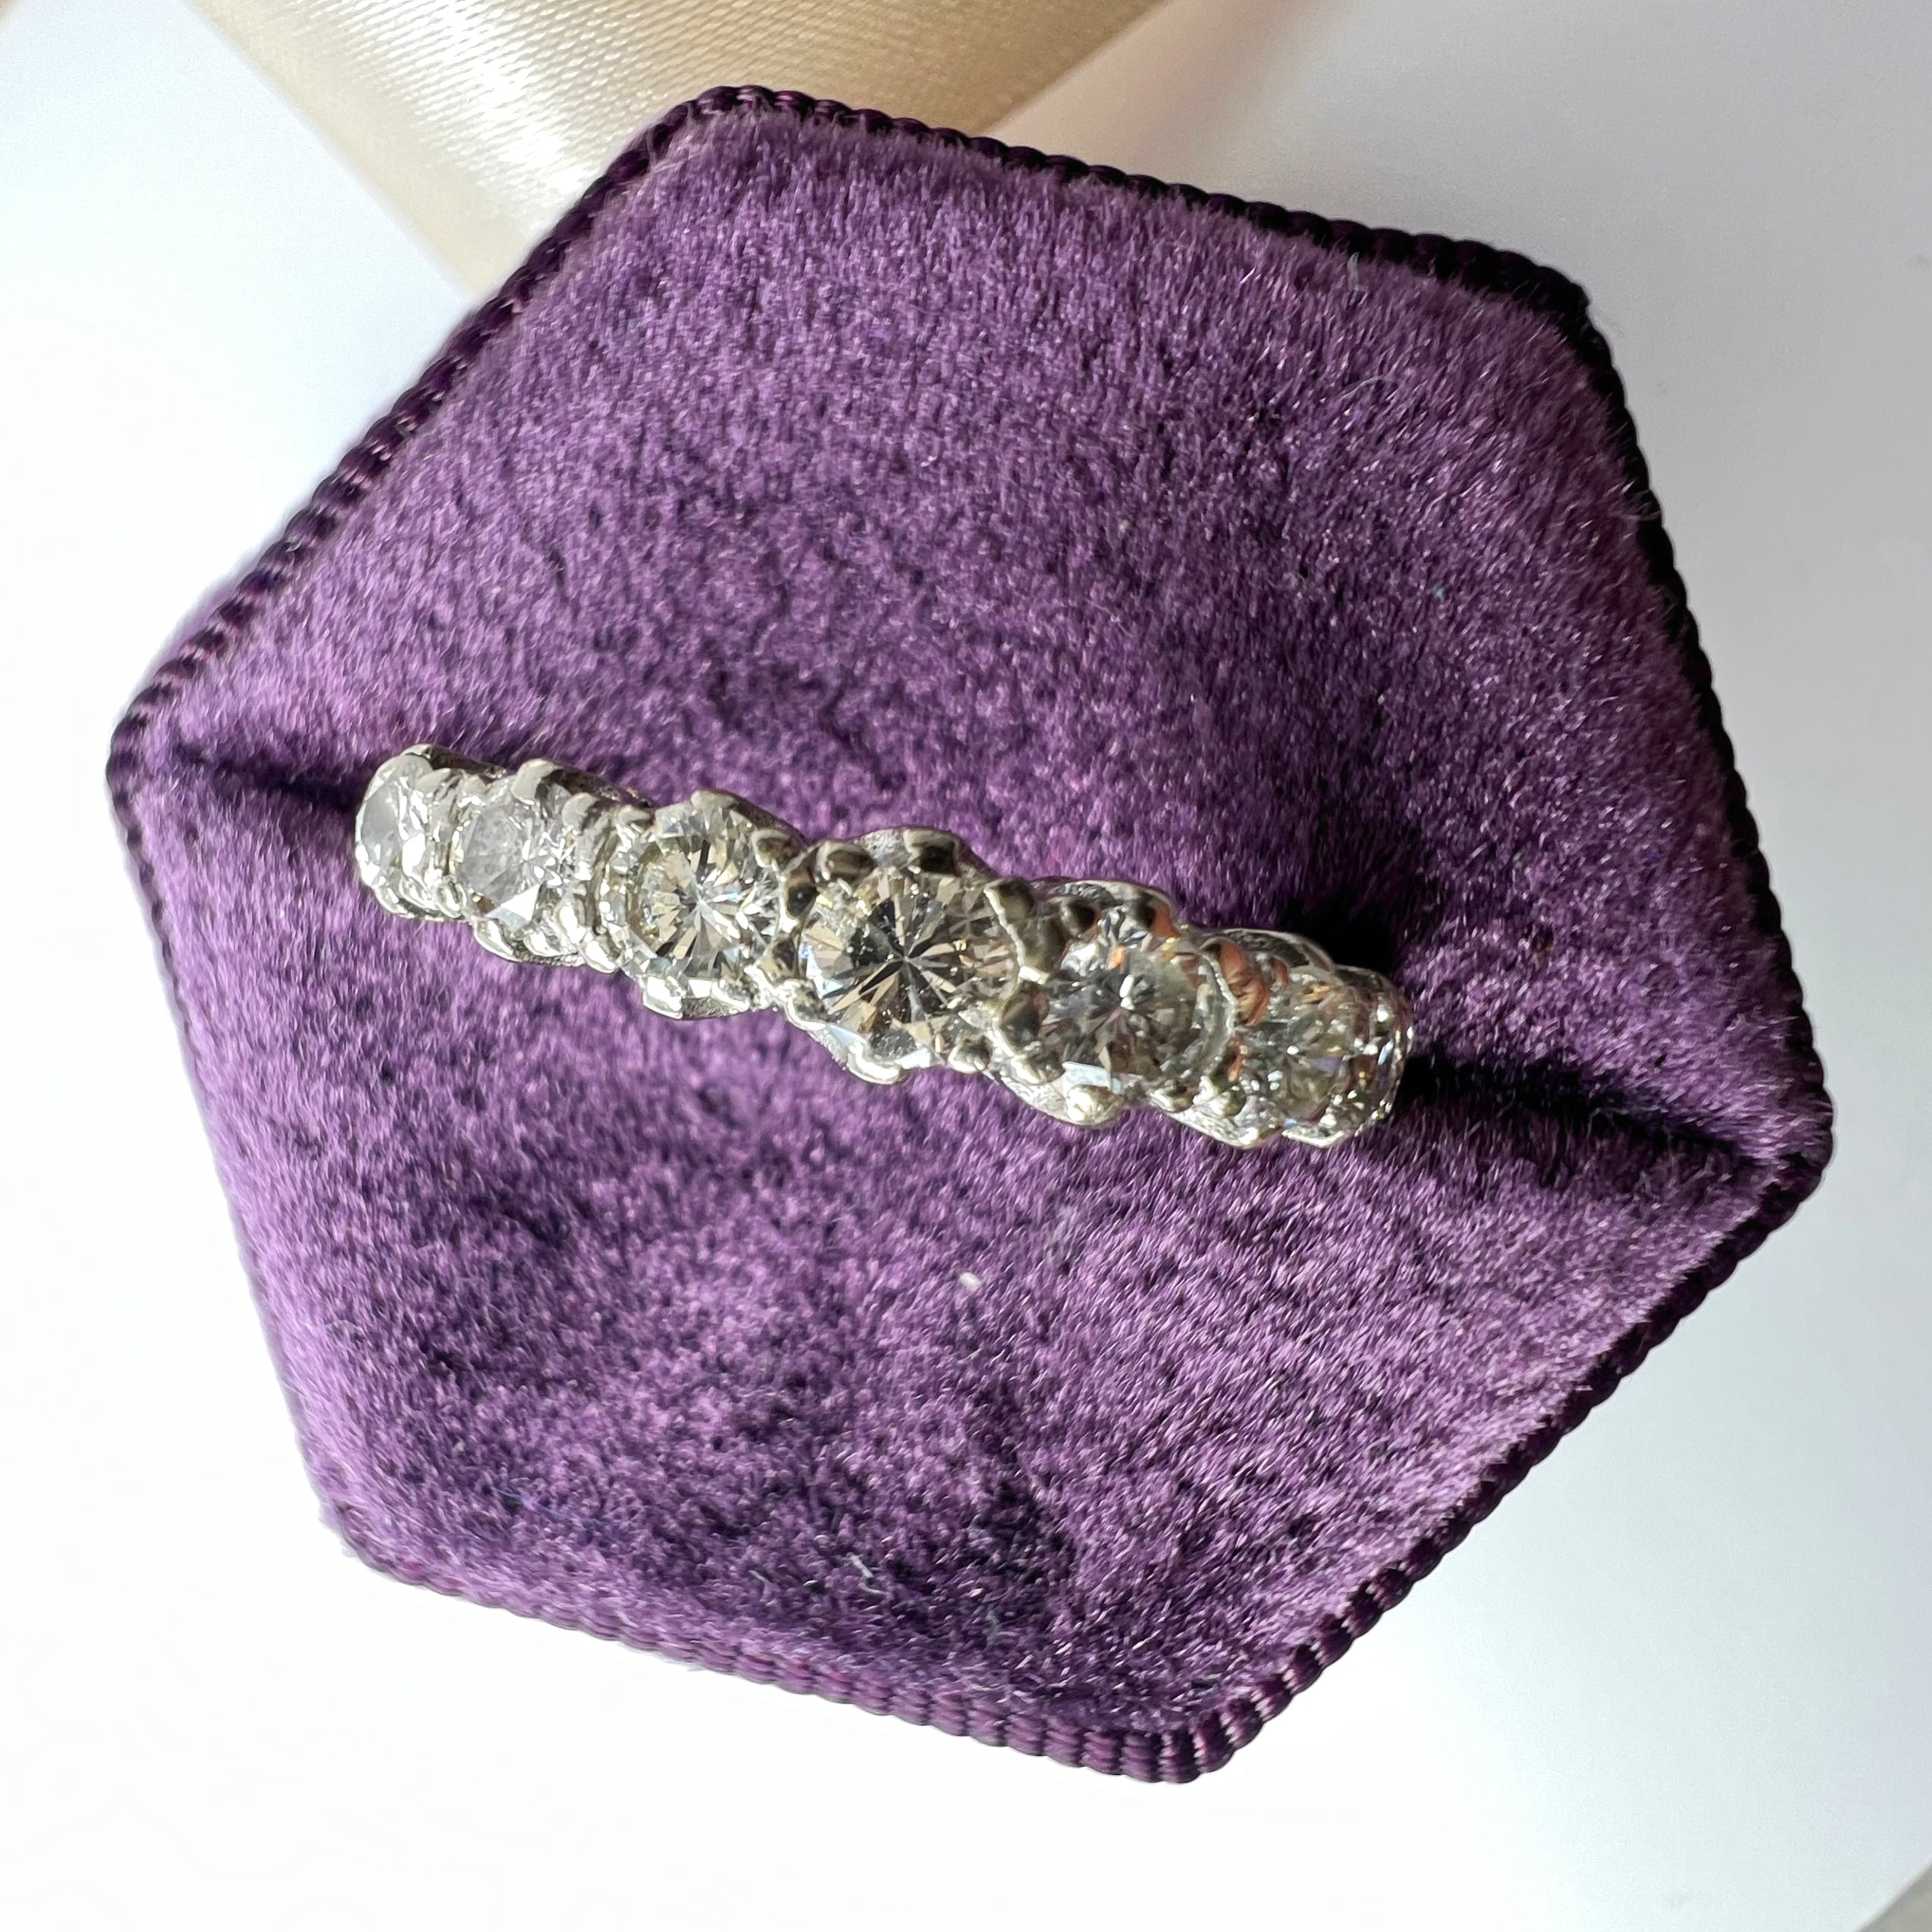 Vintage 7 Stone Diamond Ring